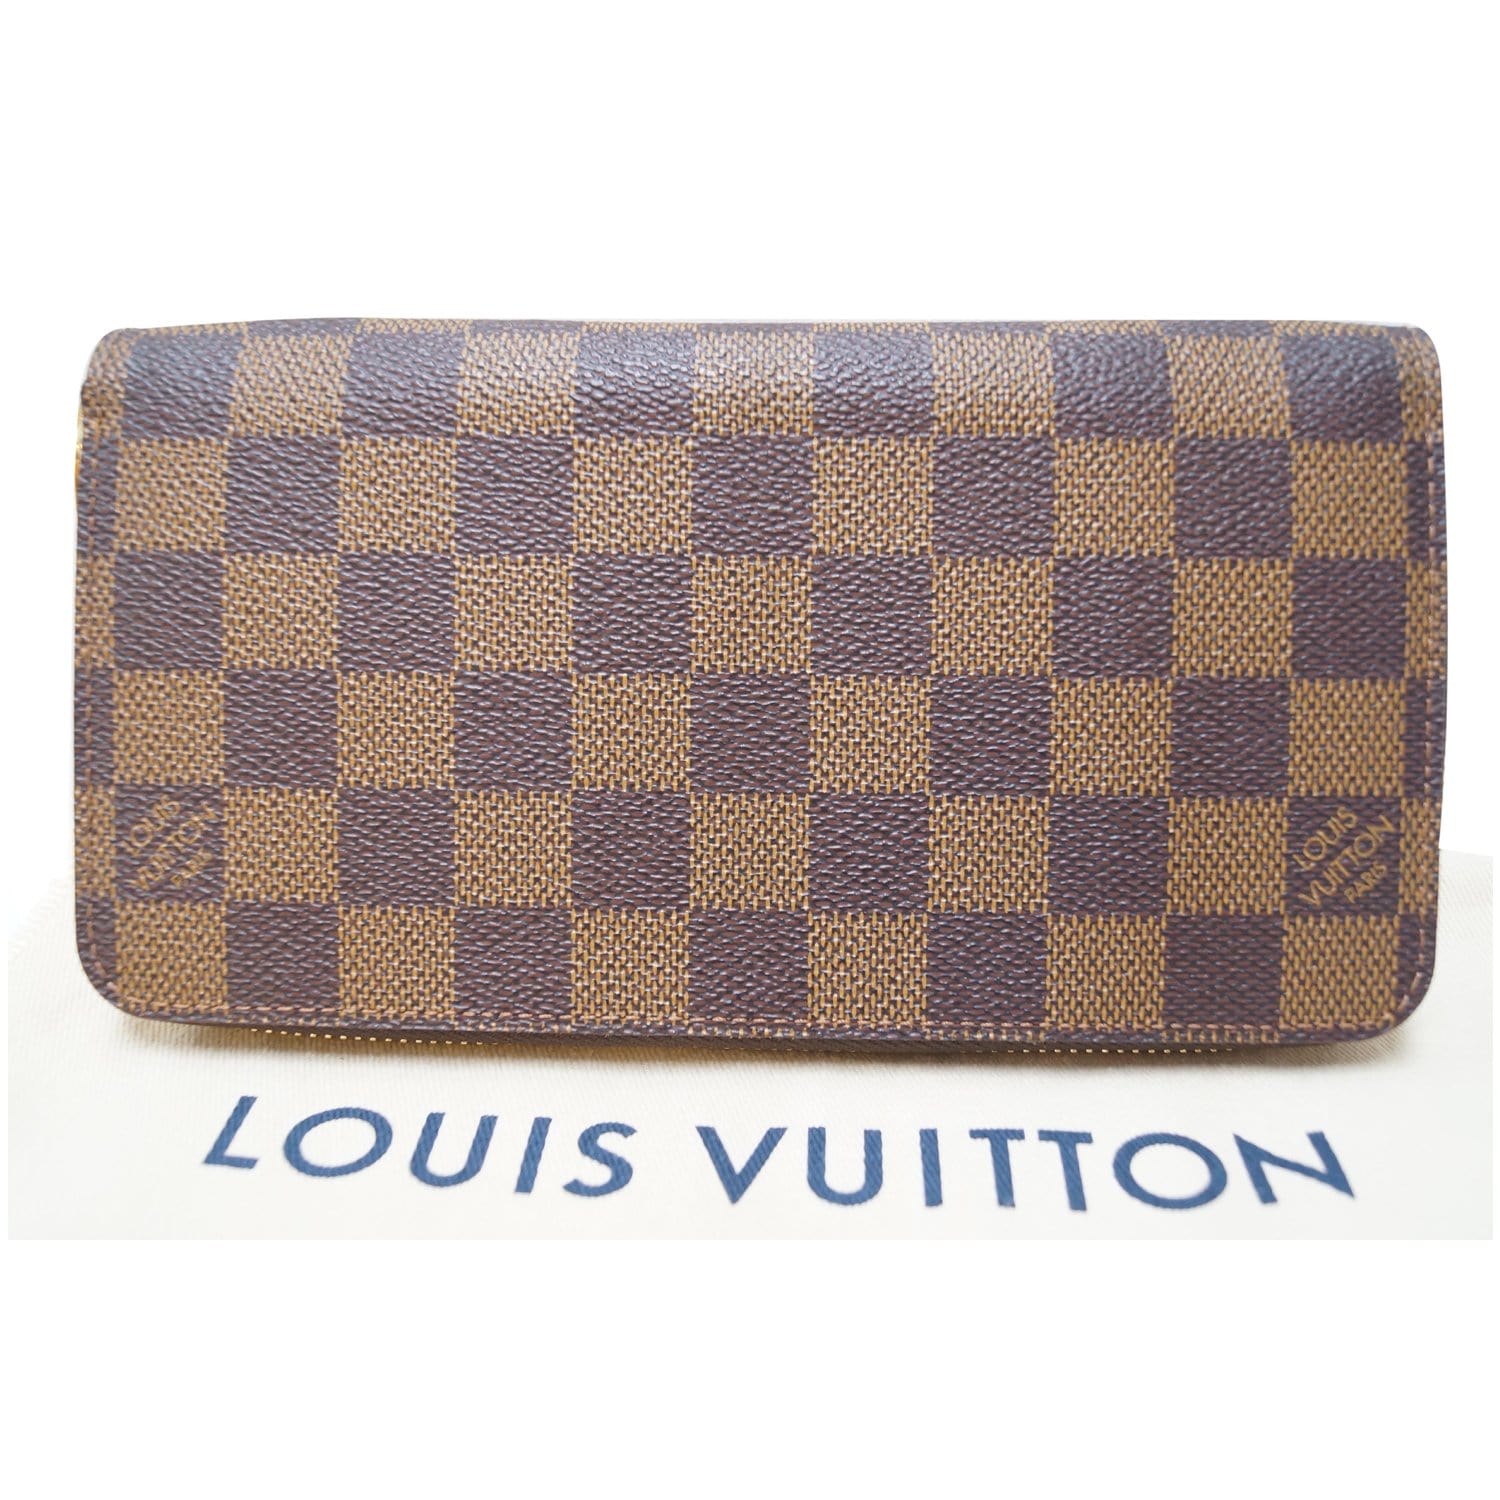 Louis Vuitton brown/tan Damier zip wallet. Beautiful interior with